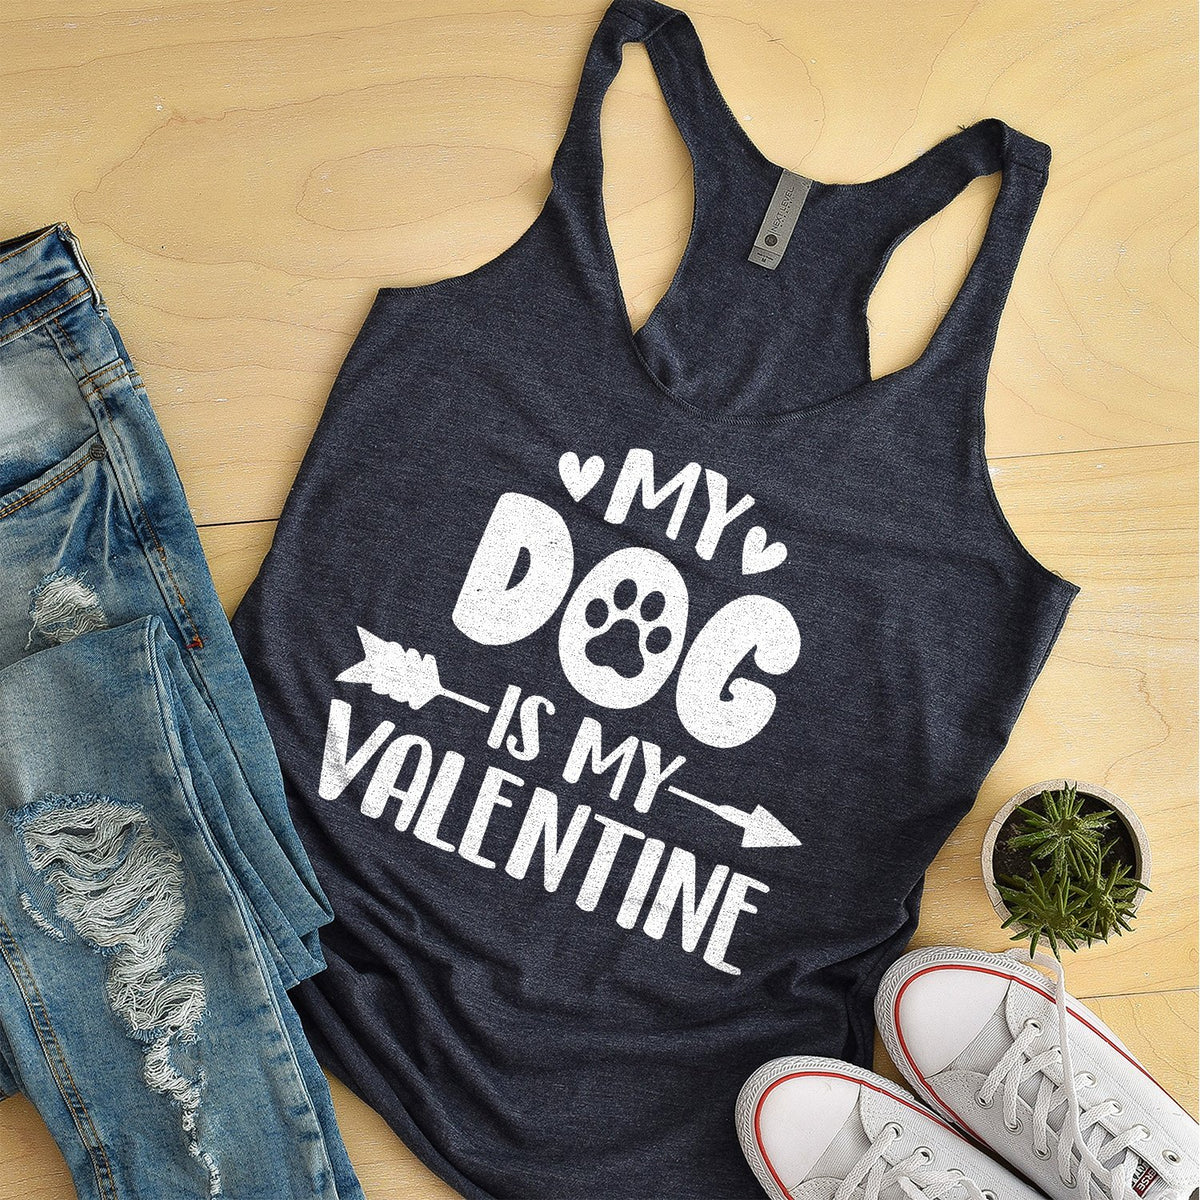 My Dog Is My Valentine - Tank Top Racerback